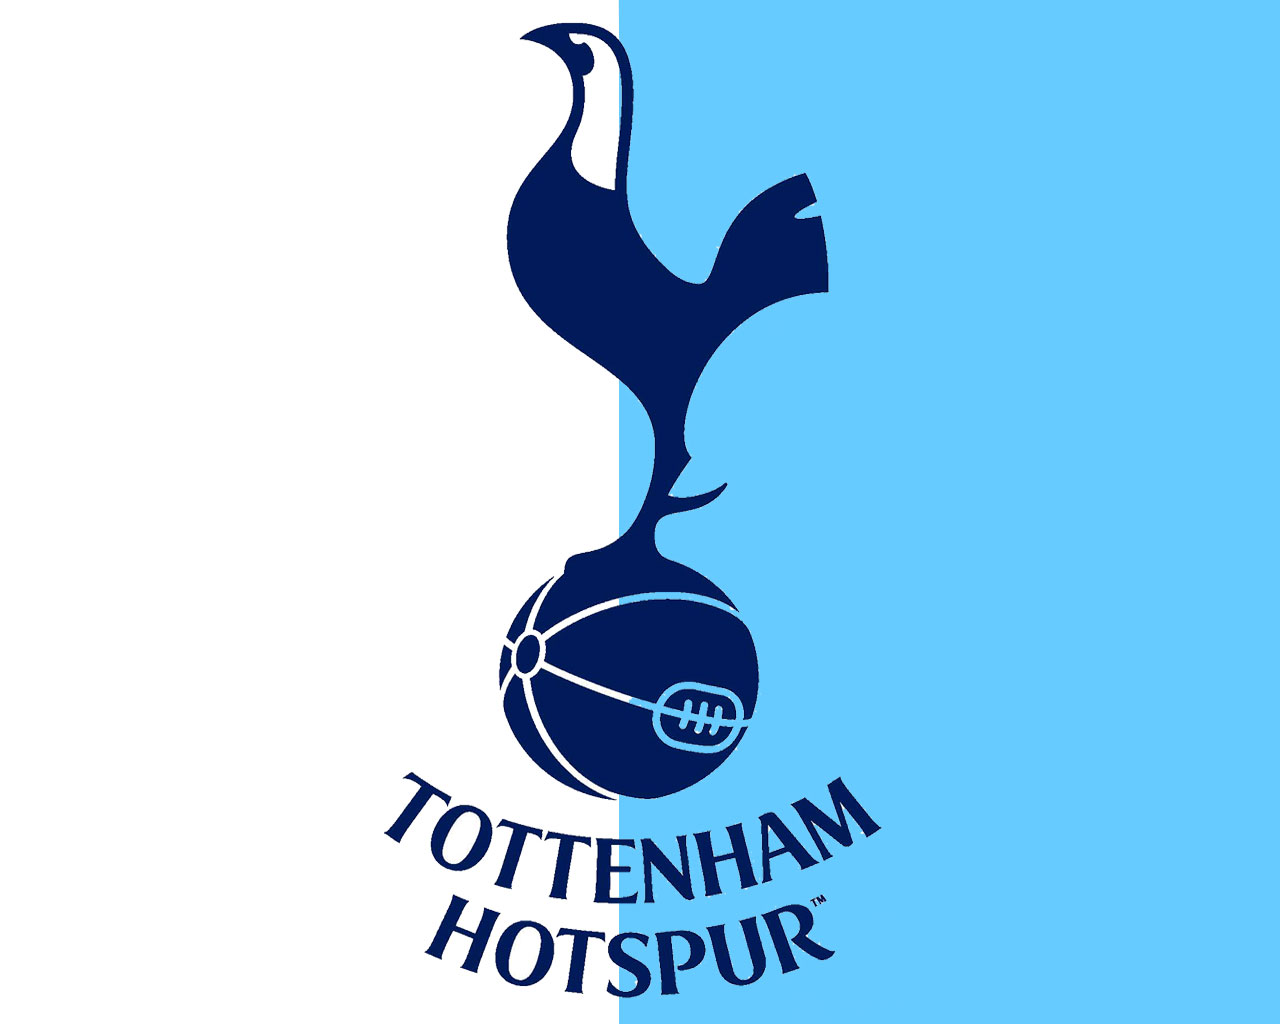 Our New Tottenham Hotspur Wallpaper